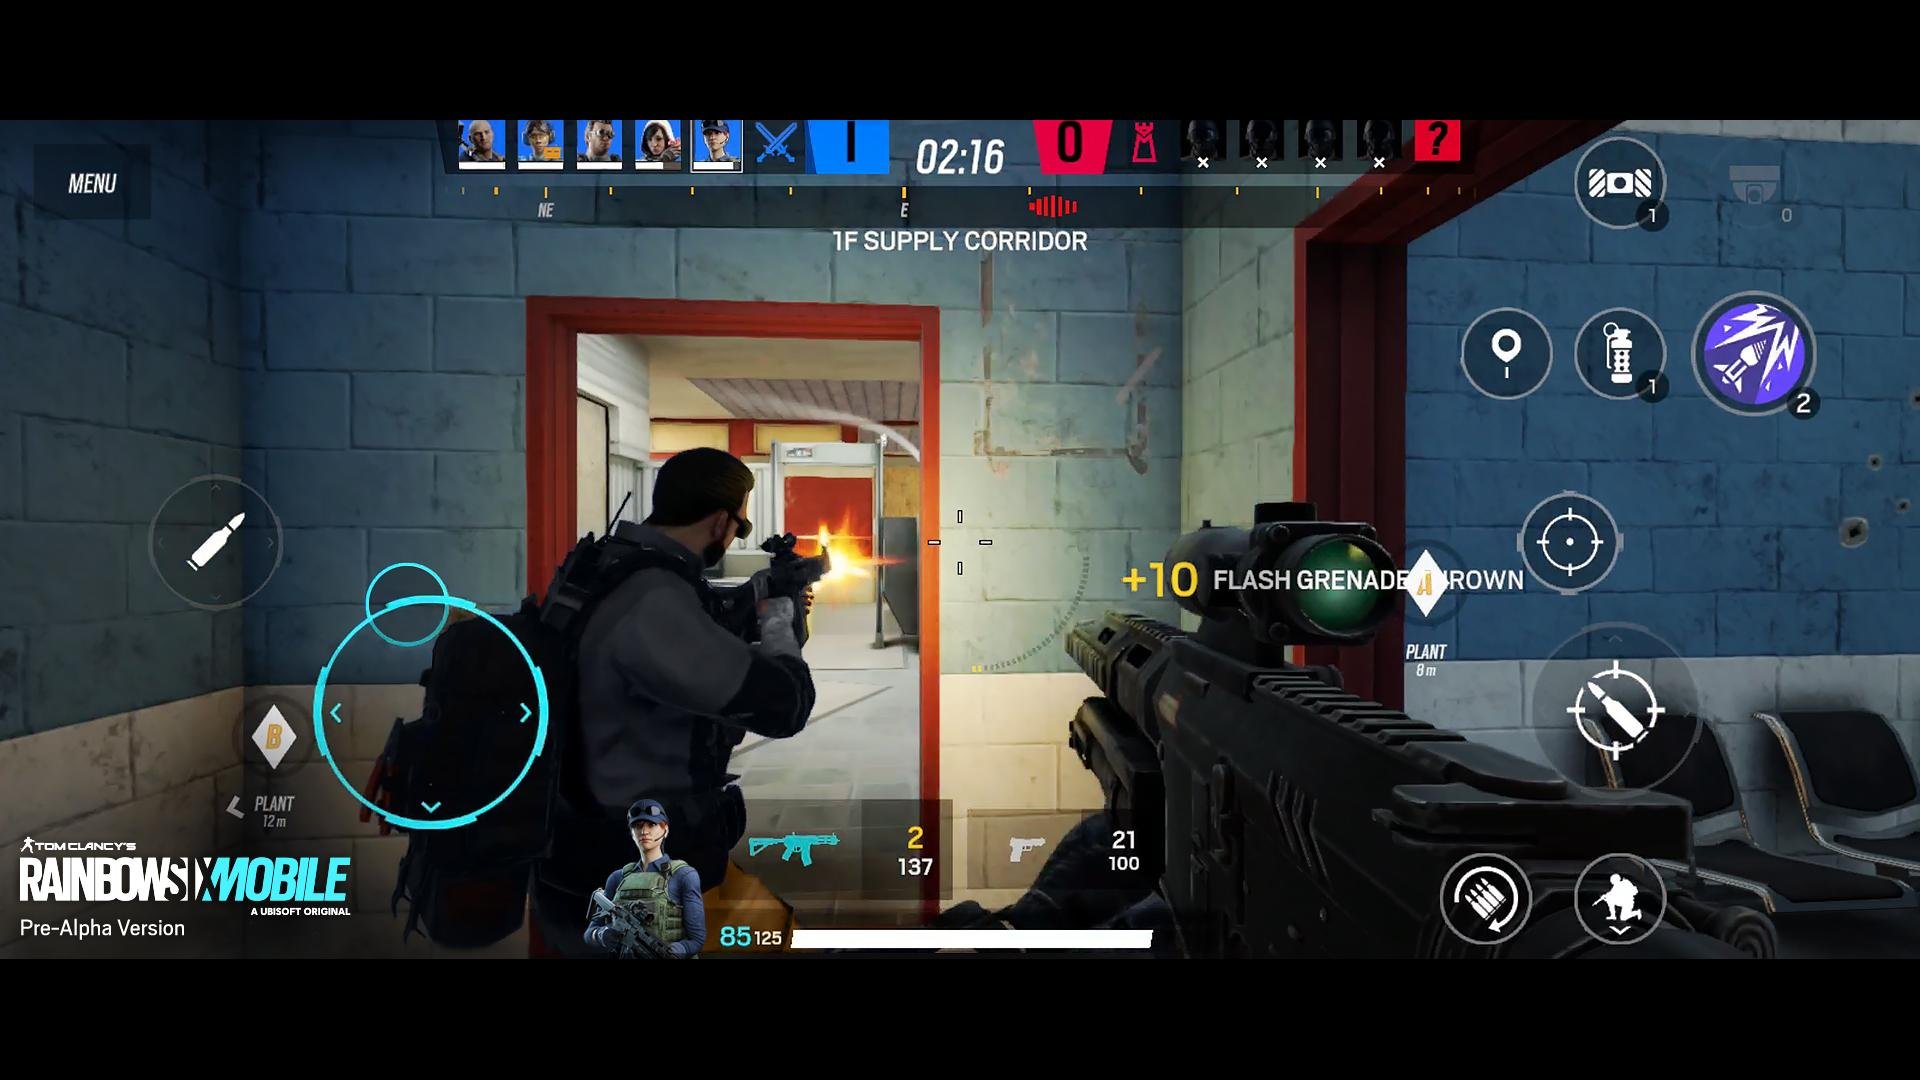 Ubisoft anuncia Tom Clancy's Rainbow Six Mobile para Android e iOS